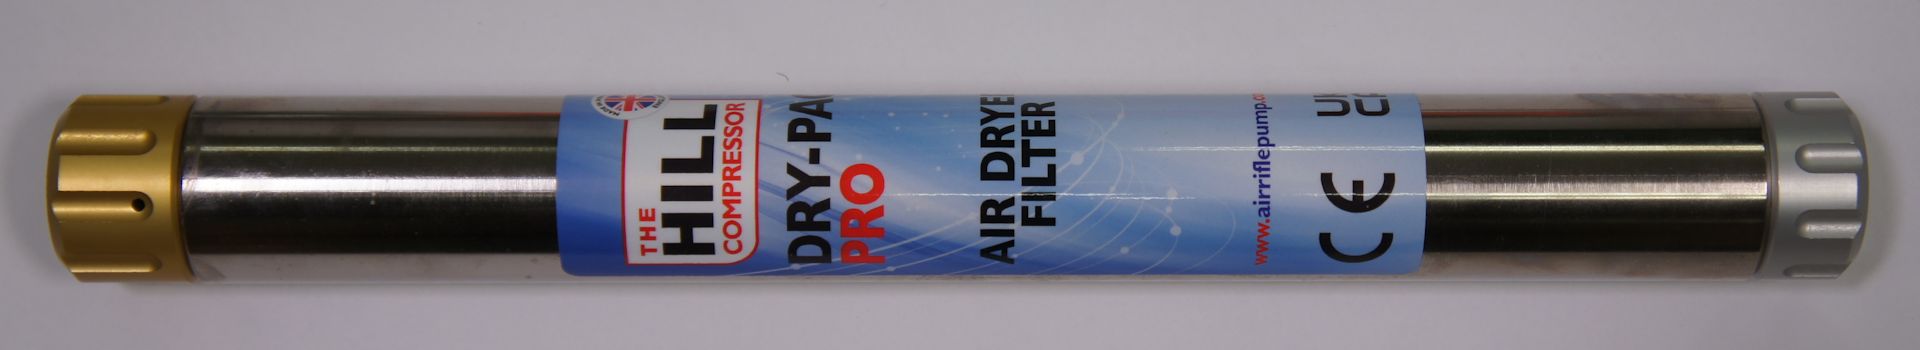 Zusatzfilter zum Kompressor Hill Dry-Pac Pro Air Dryer